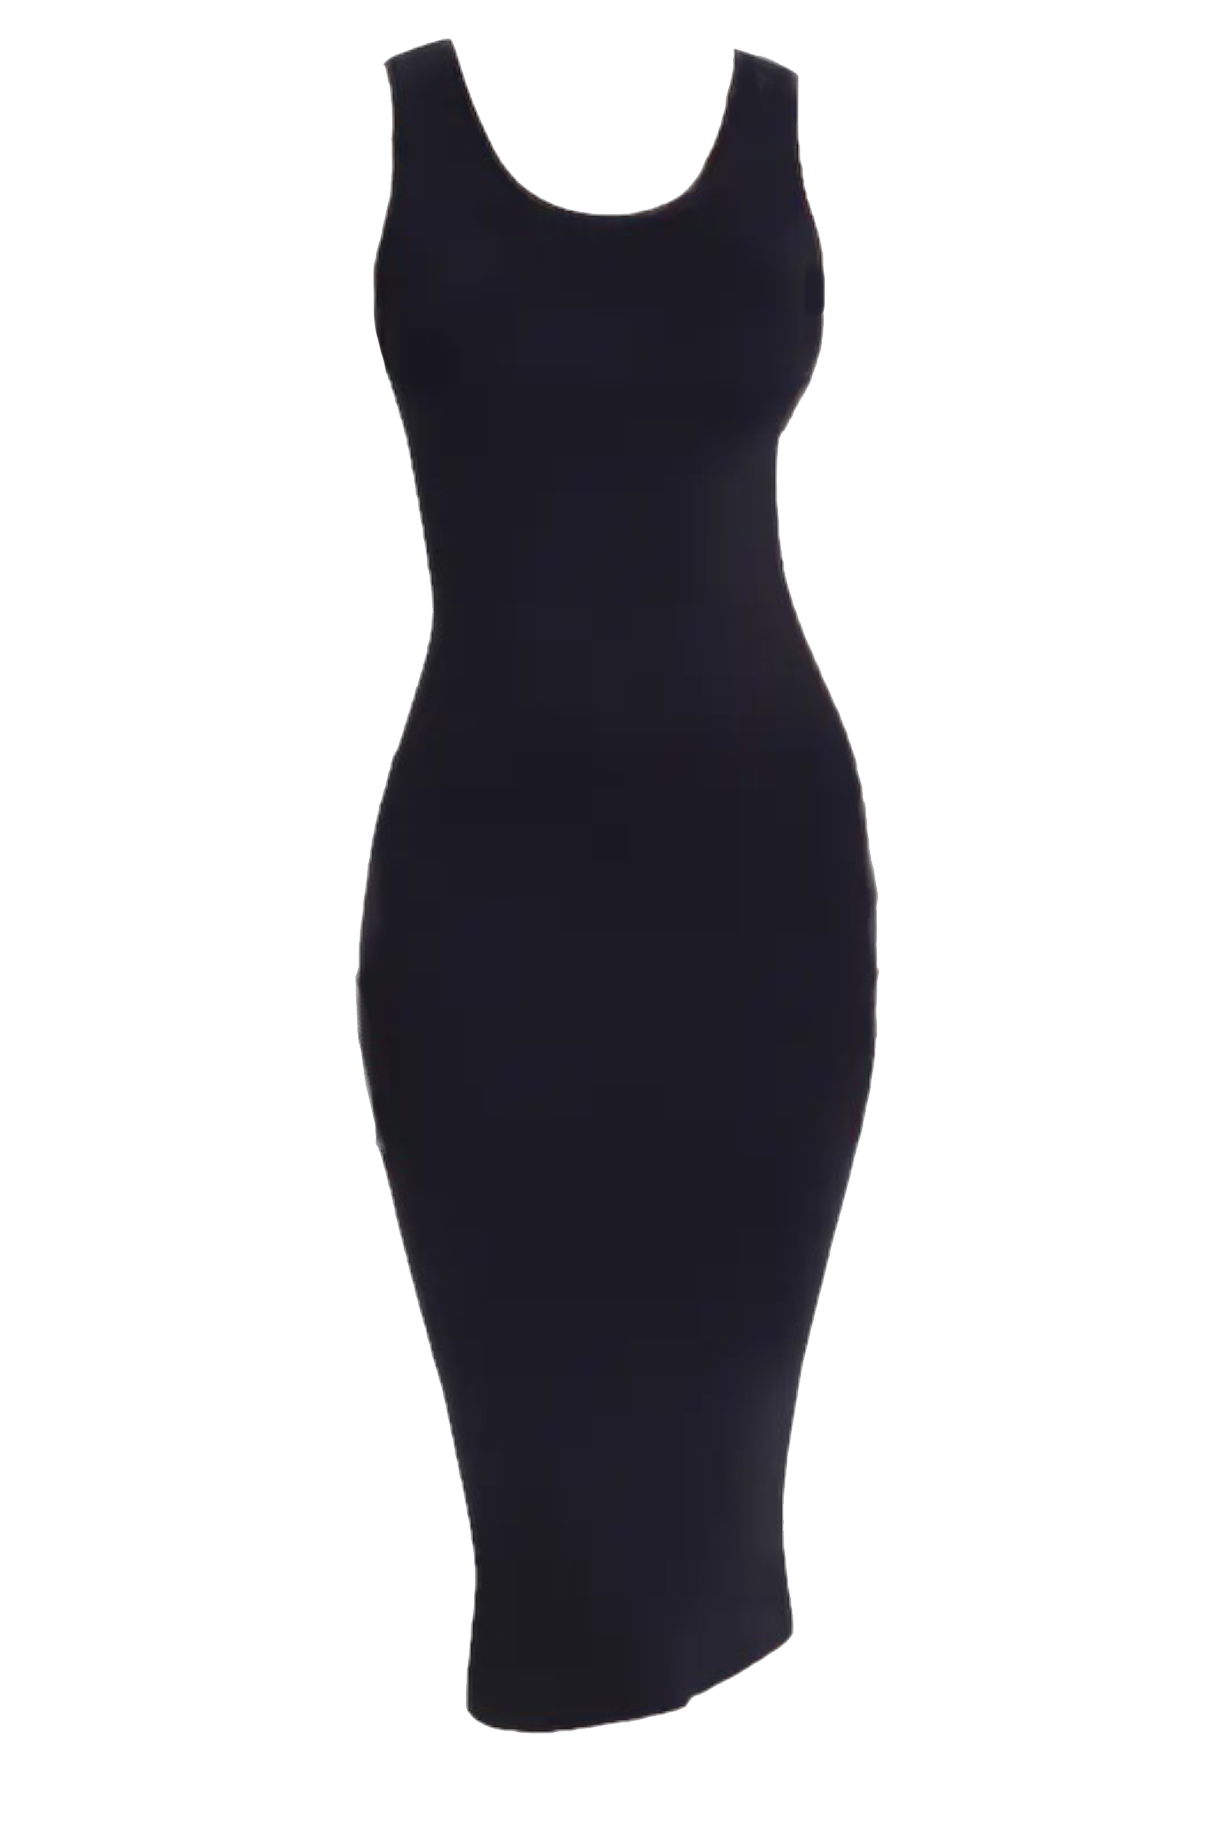 Glow Fashion Boutique Black Layering Dress